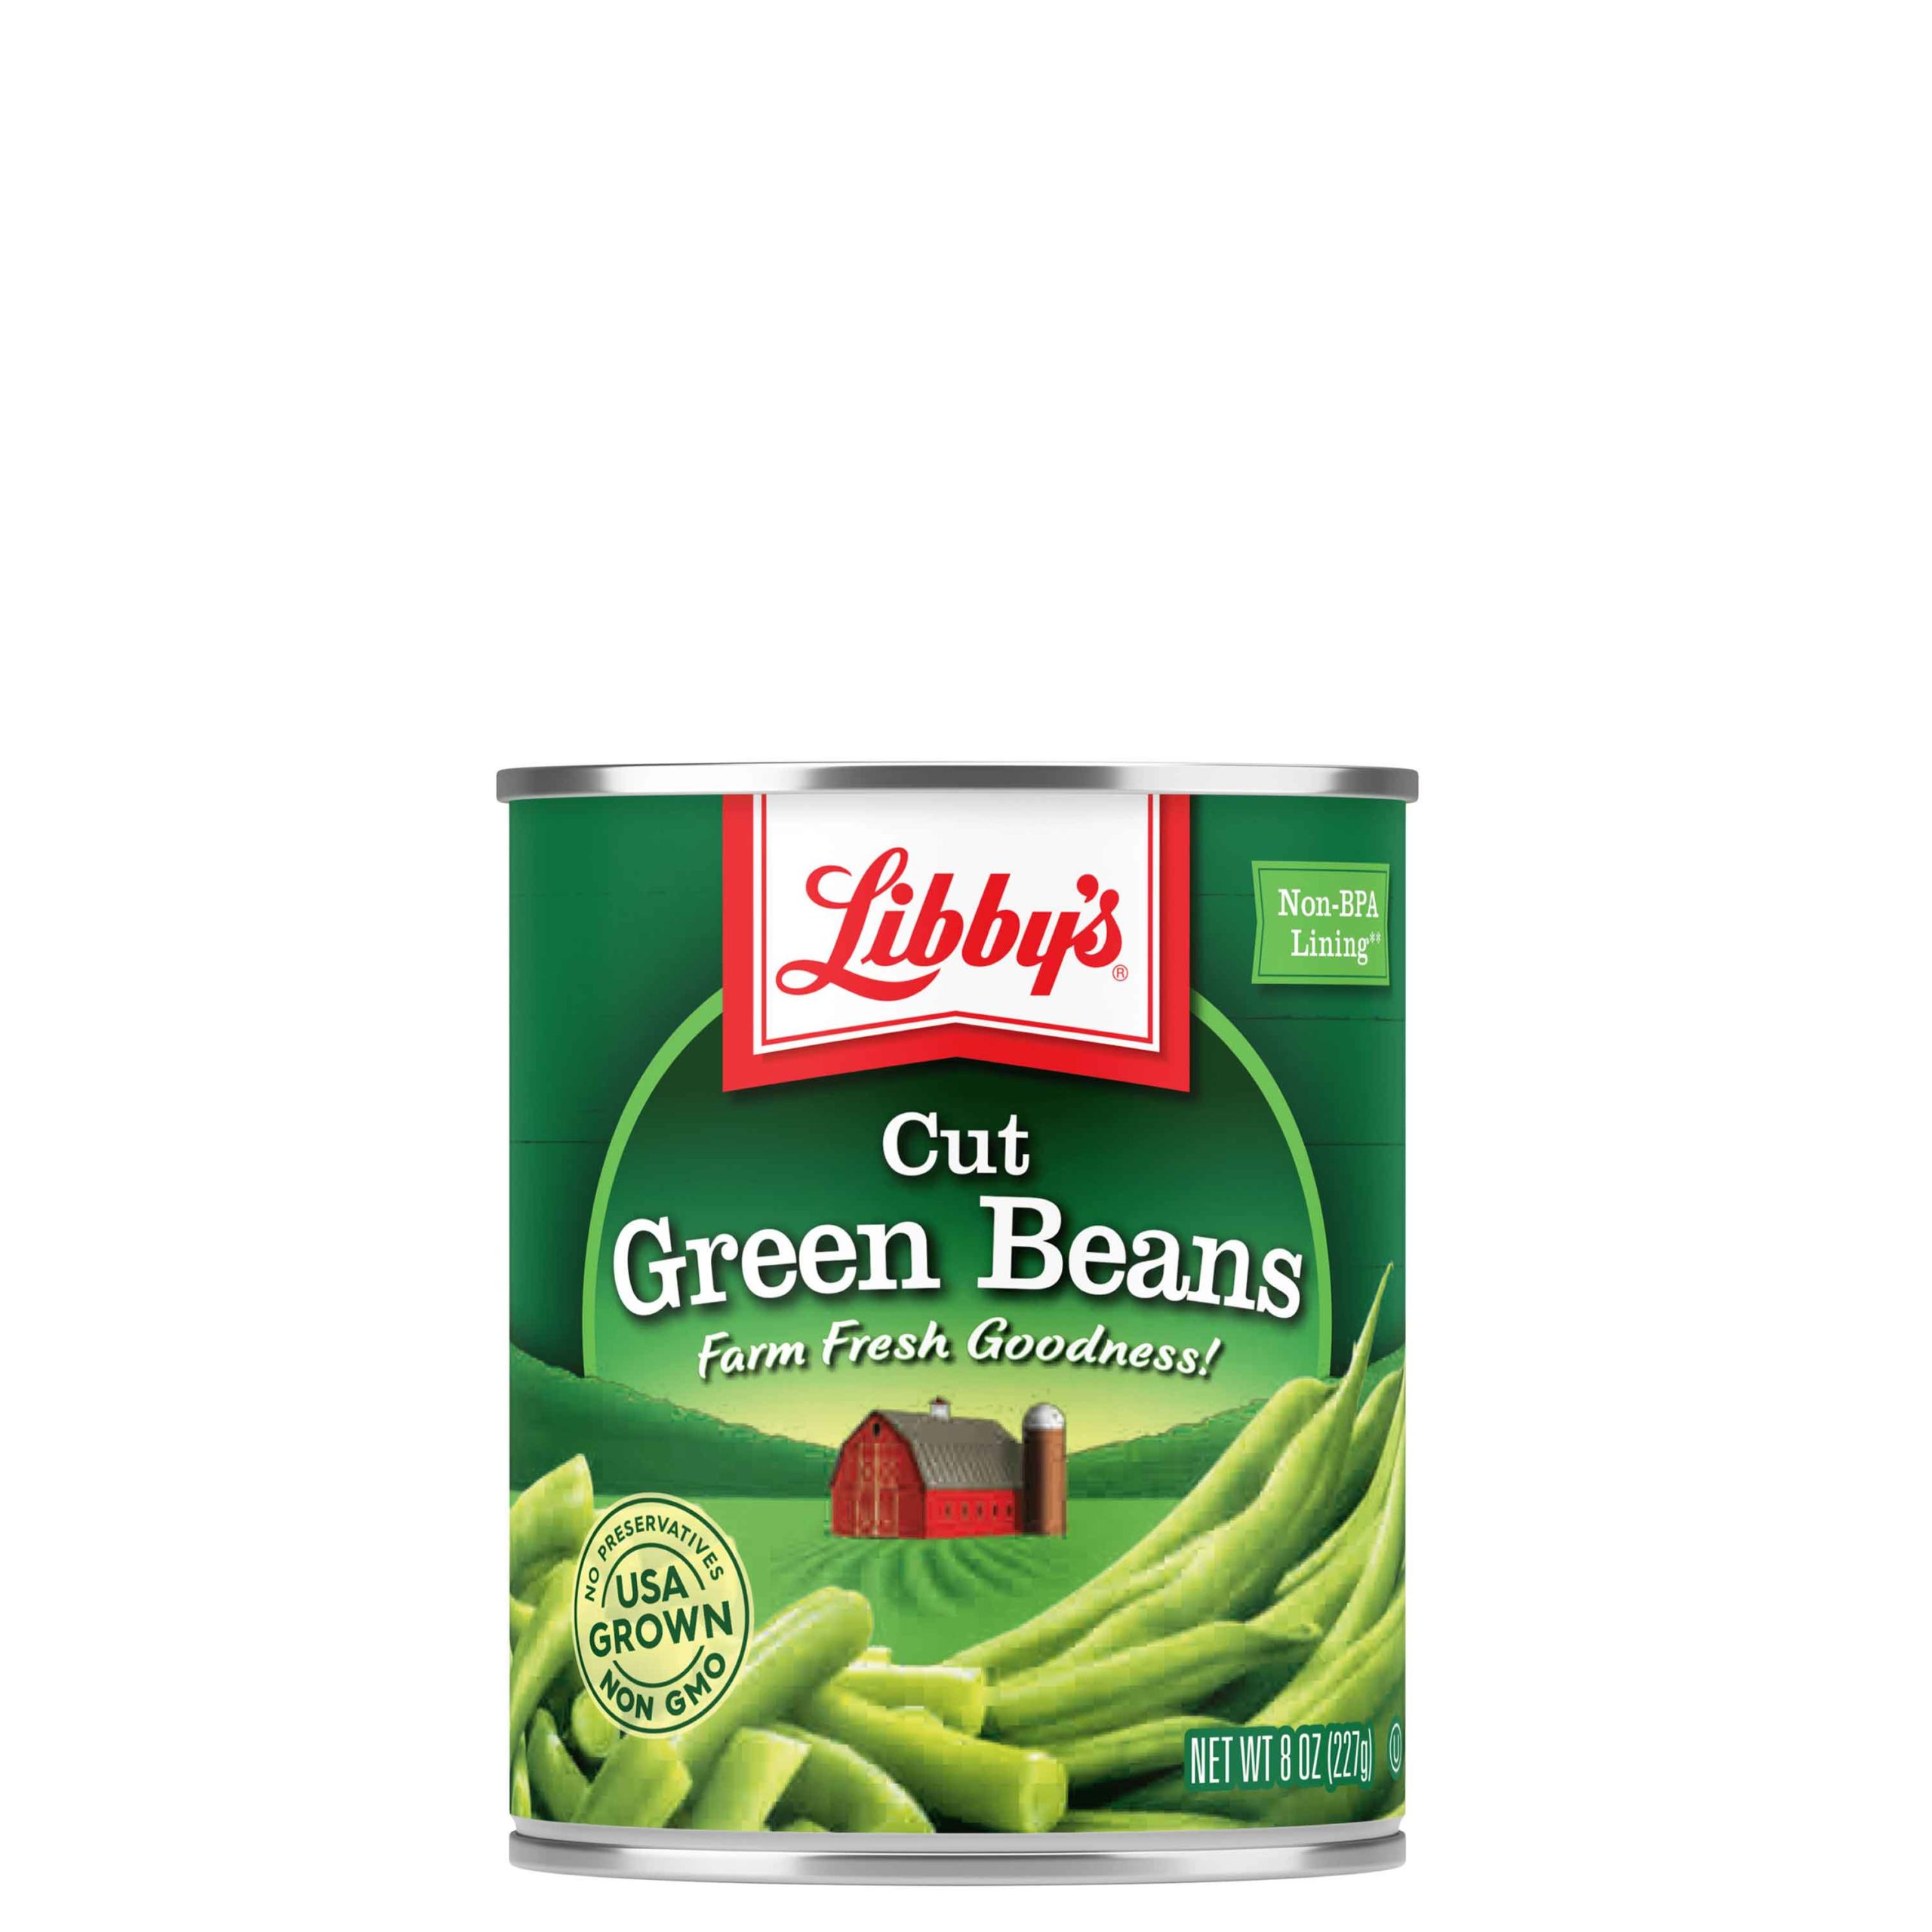 Bohin Glue pen - The little Green Bean